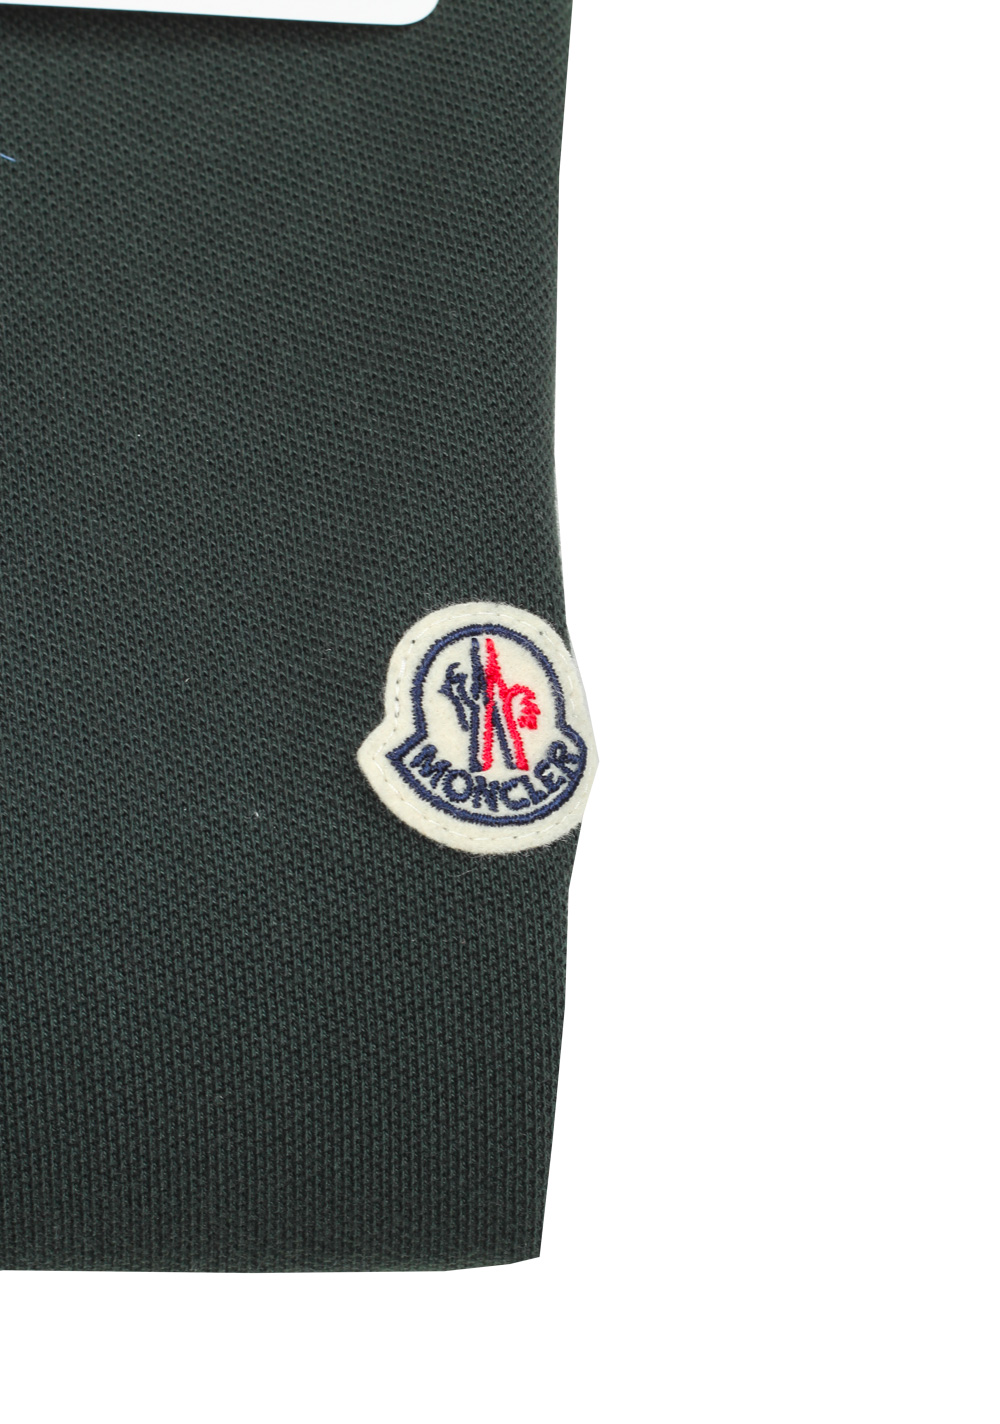 Moncler Green Long Sleeve Polo Shirt Size L / 40R U.S. | Costume Limité